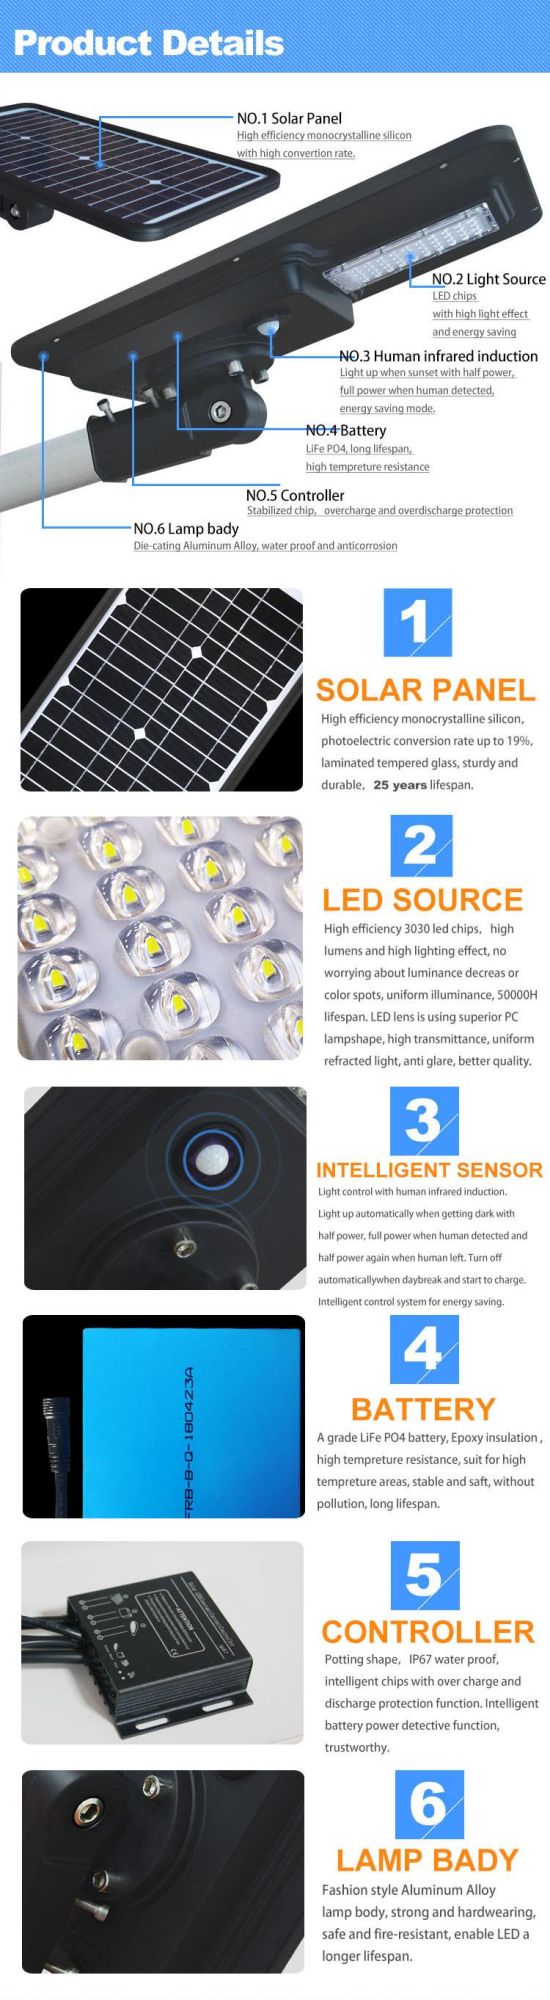 Hot Sale Portable Solar Hybrid Generator LED Street Light